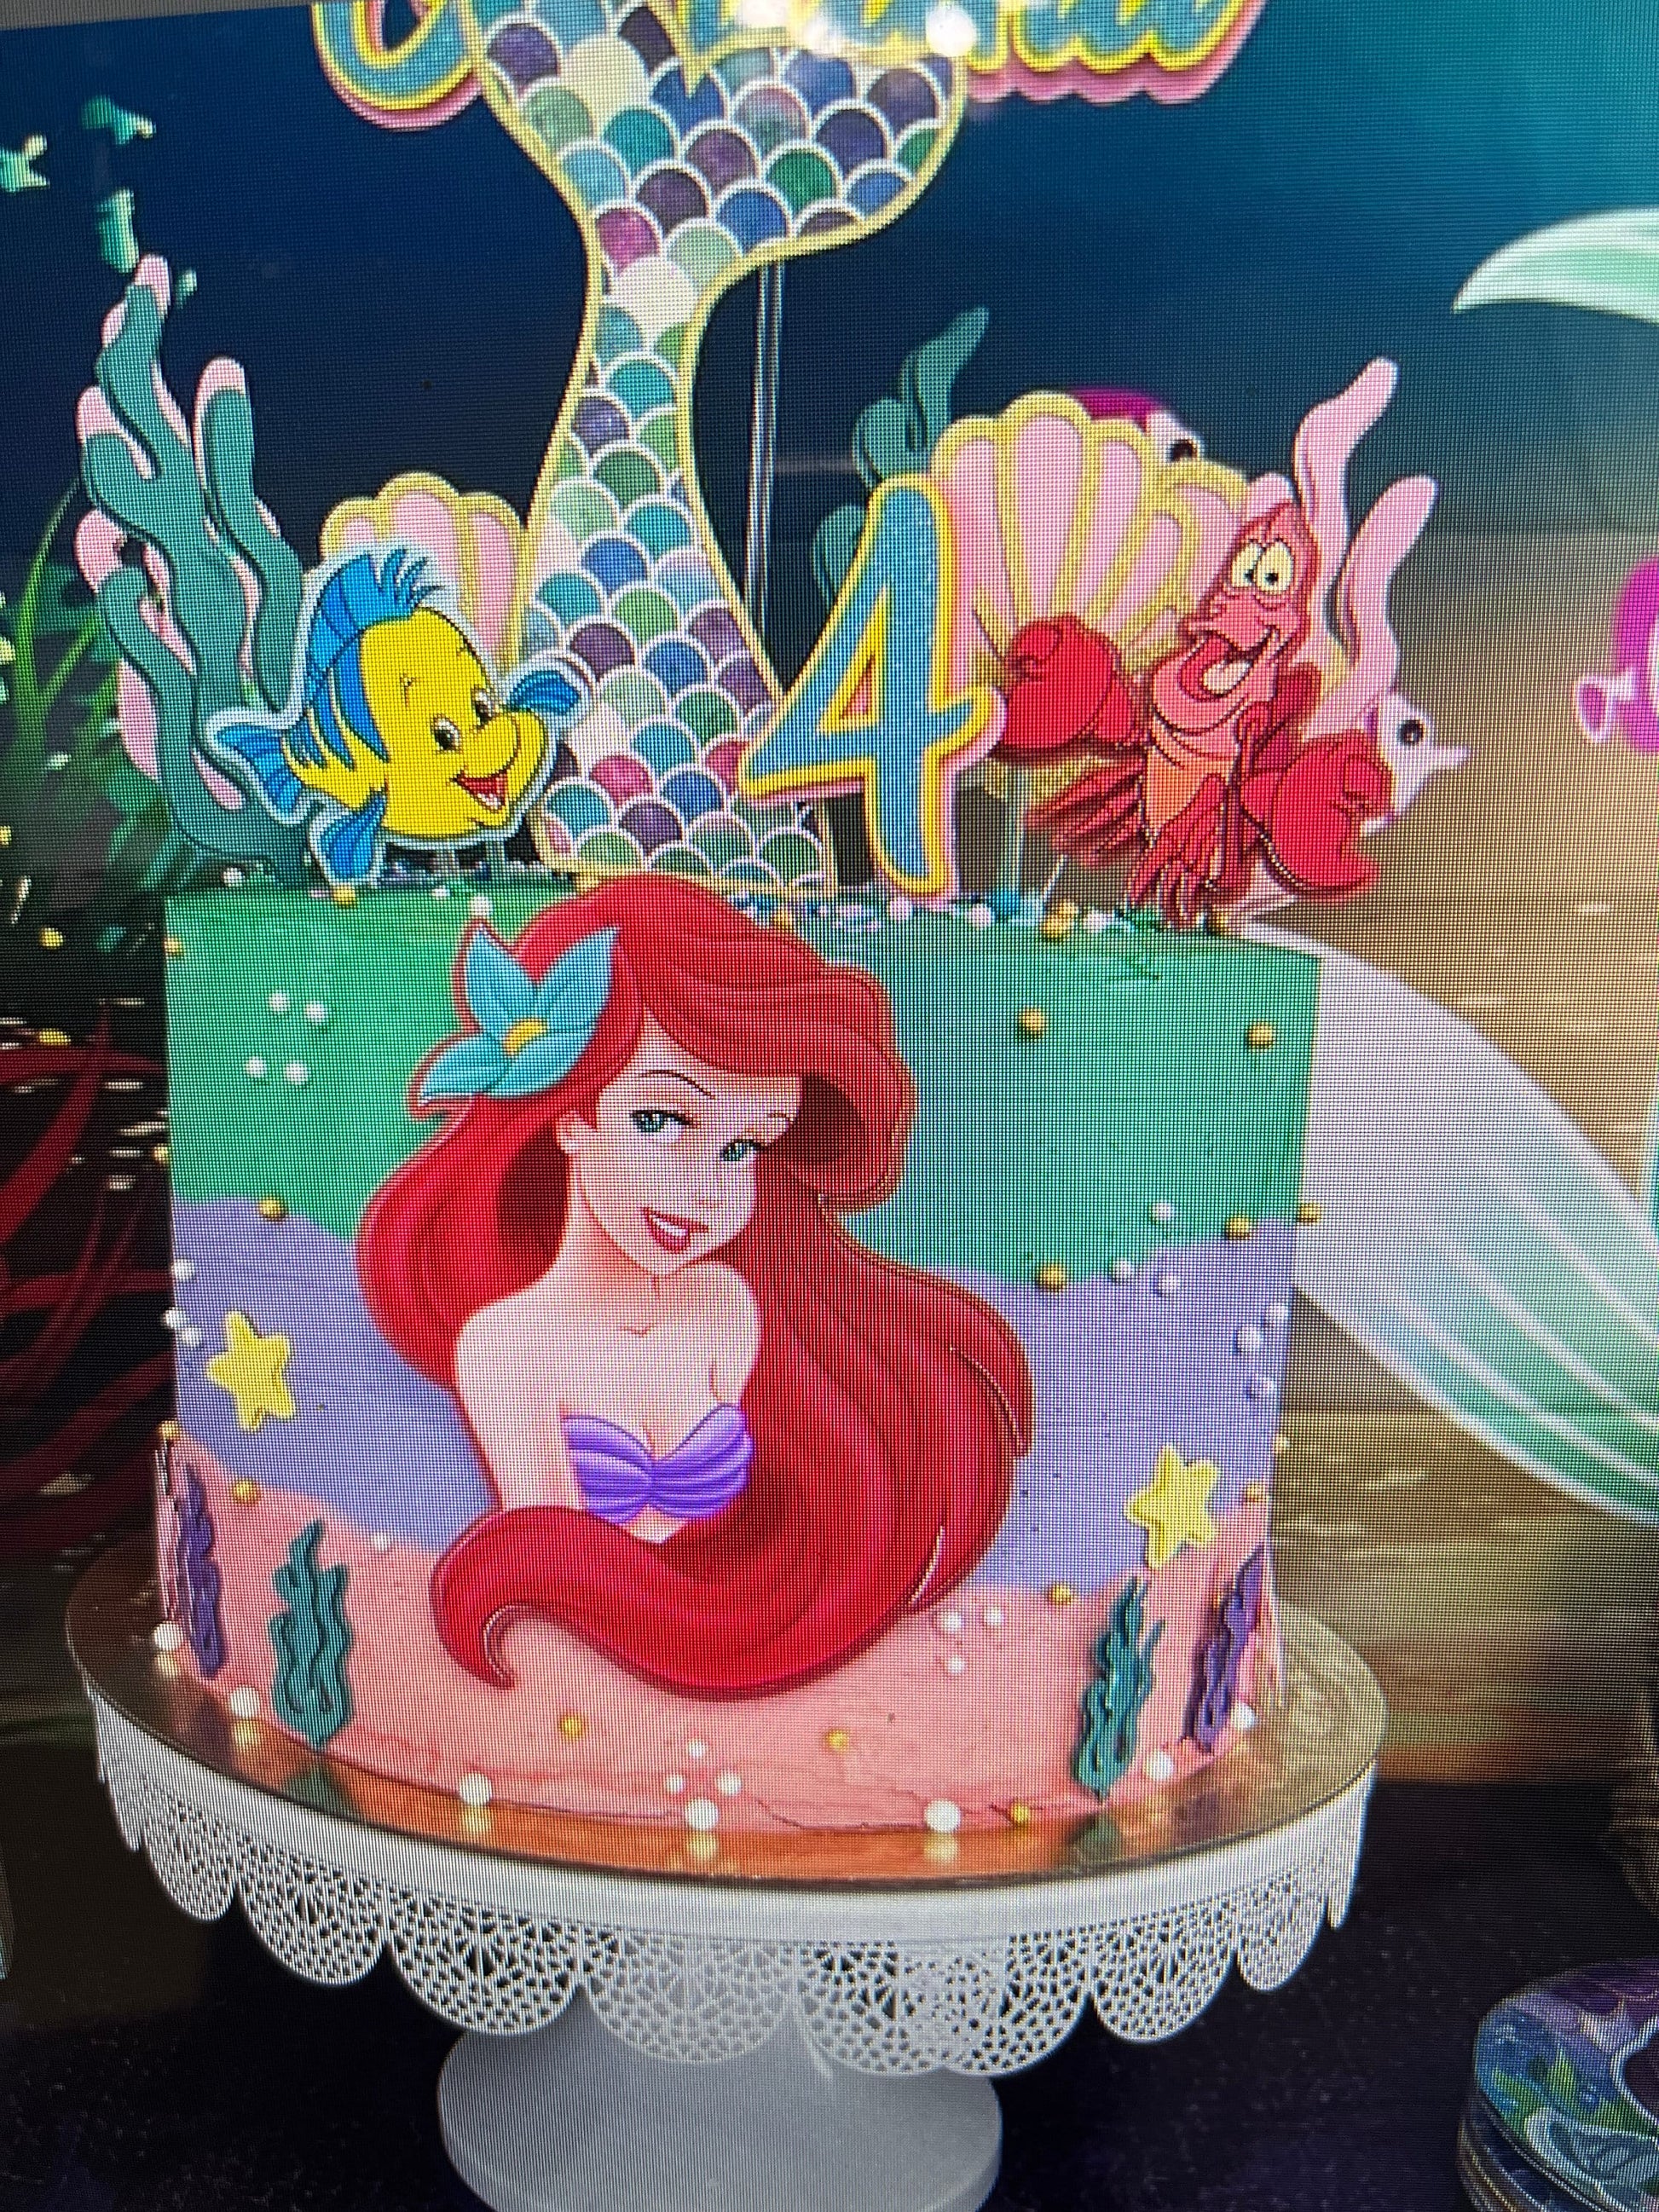 The Little Mermaid Cake Tutorial!